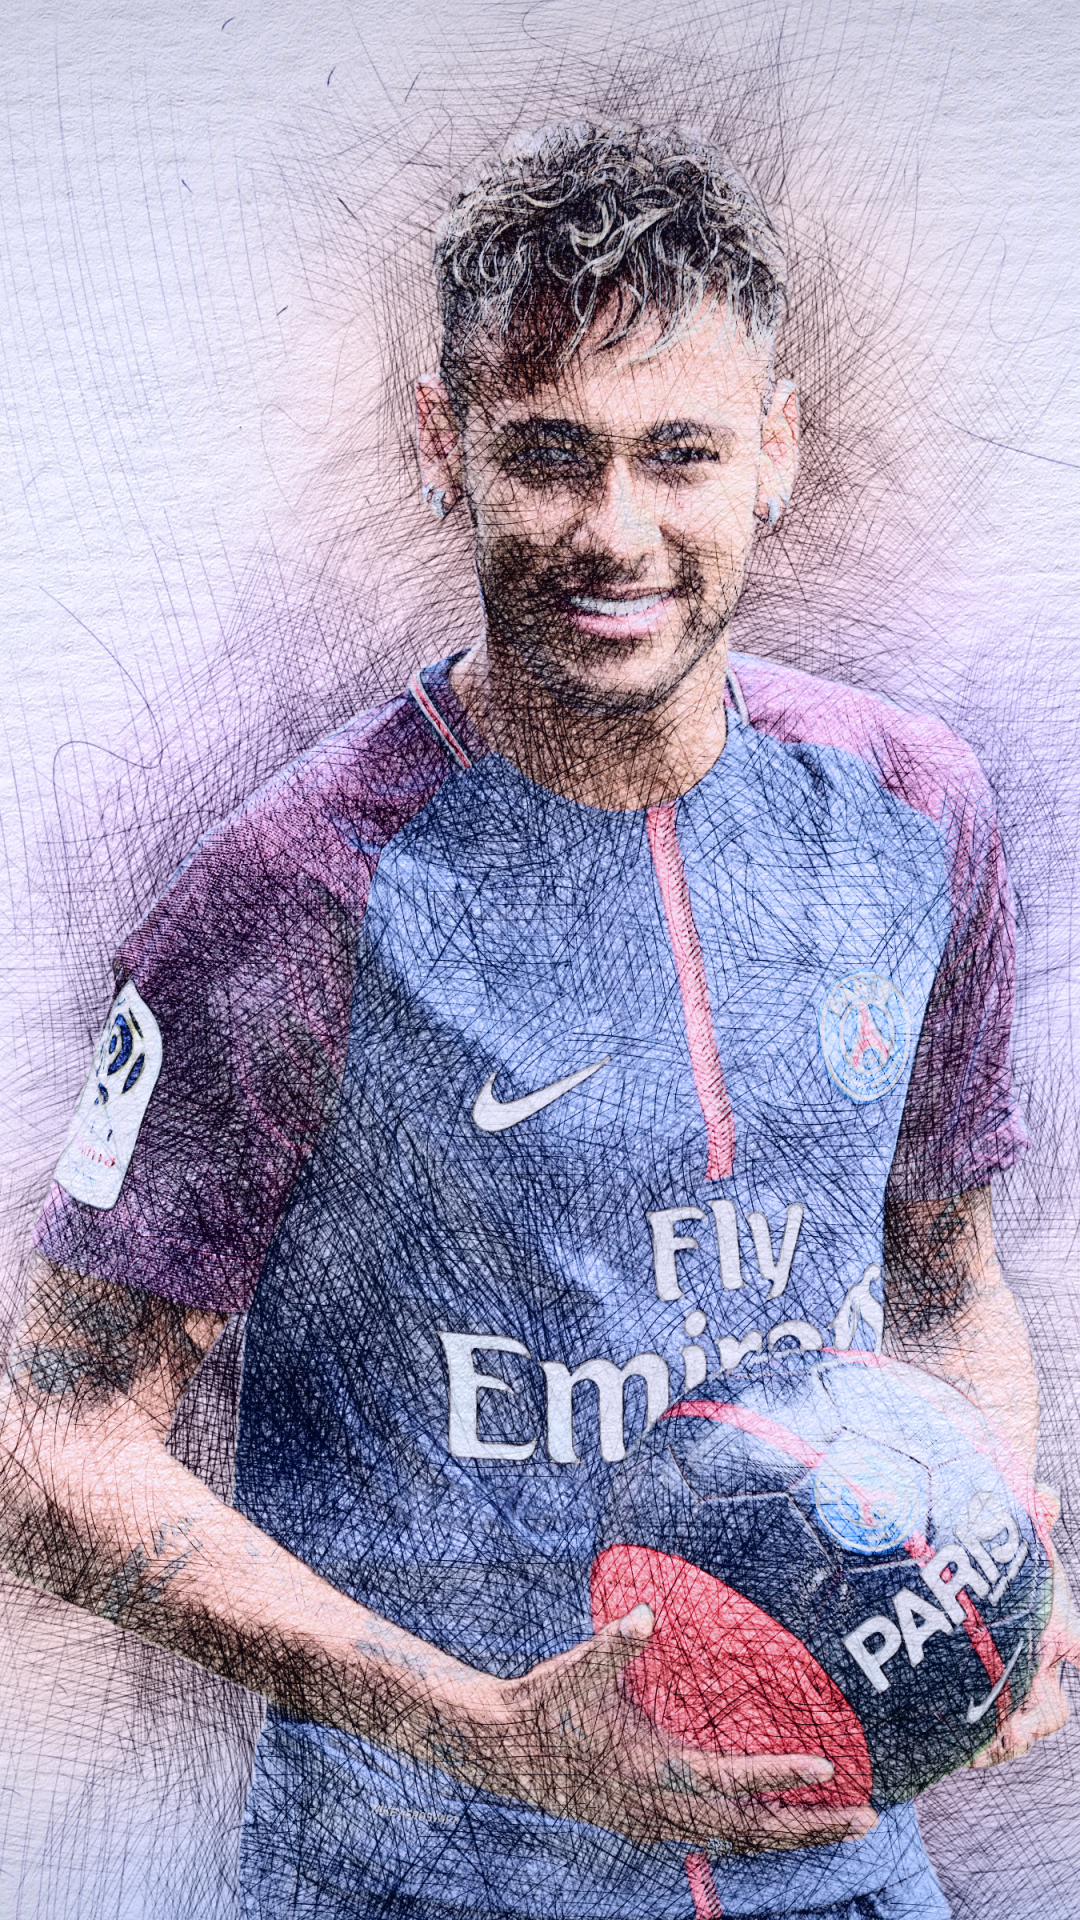 Handy-Wallpaper Sport, Fußball, Paris Saint Germain, Neymar, Paris Saint Germain Fc kostenlos herunterladen.